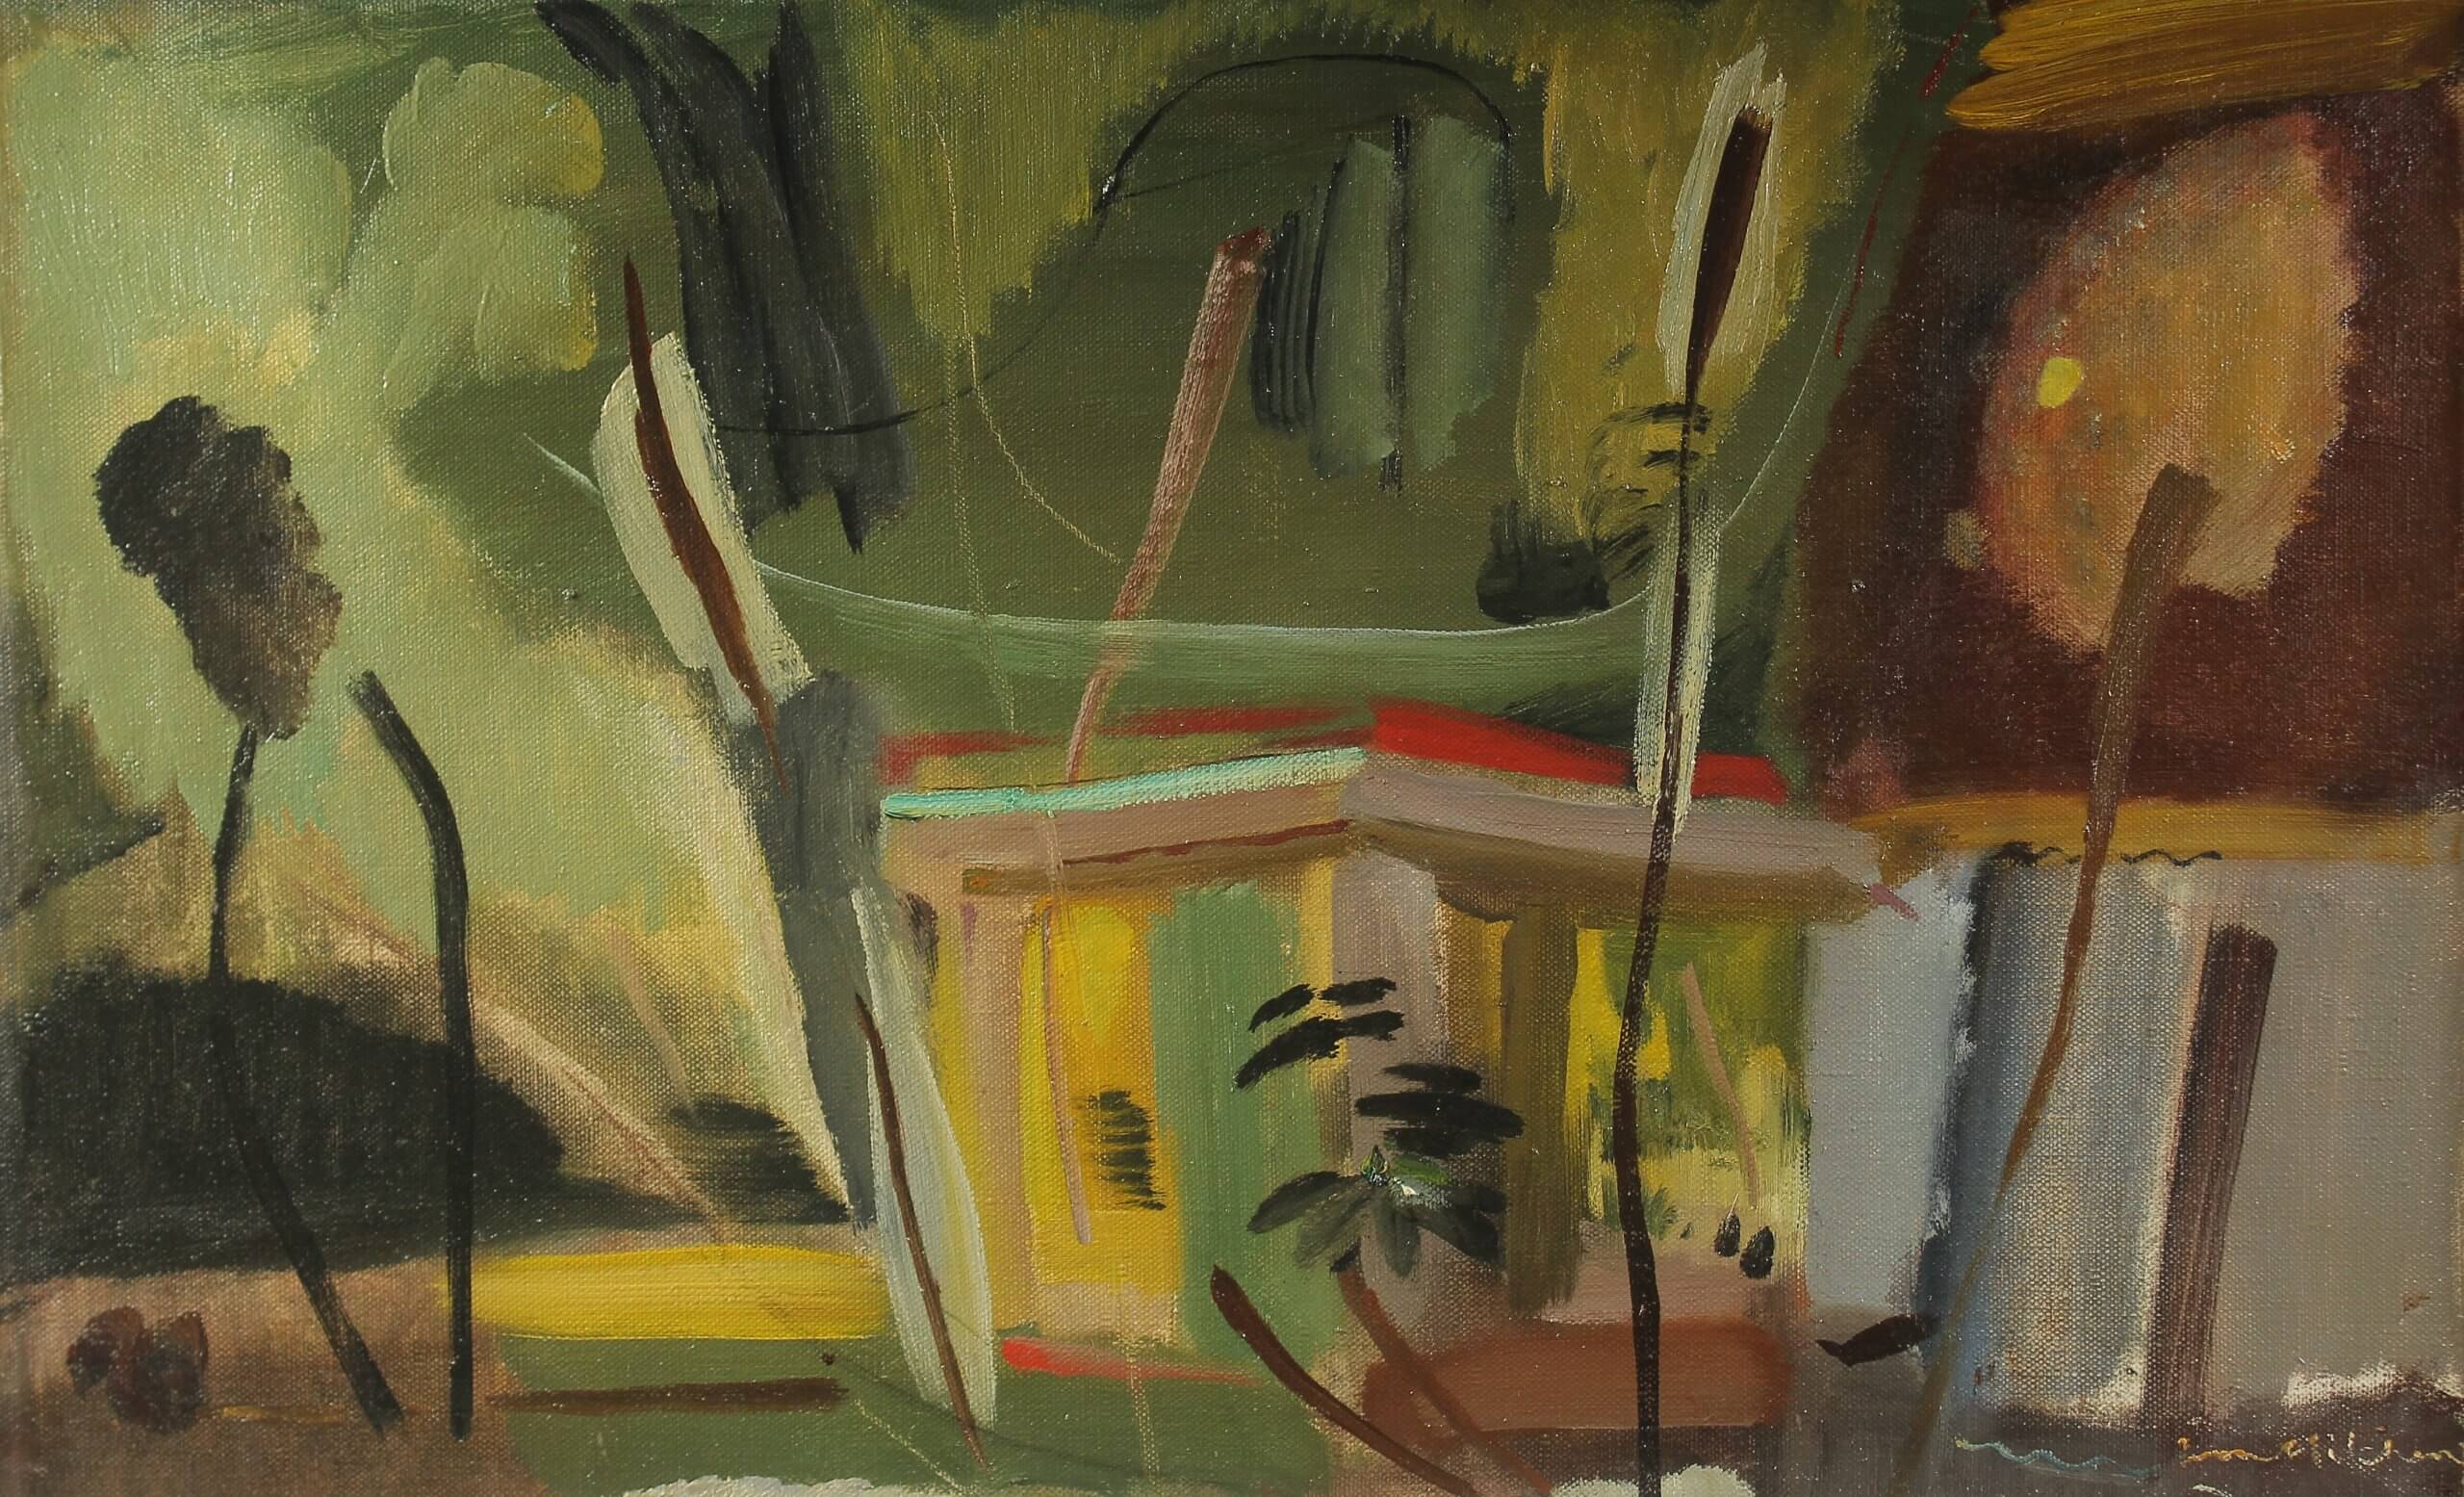 Ivon Hitchens (1893-1979), ‘Pavilion’, oil on canvas, signed, 20” x 33” (51 x